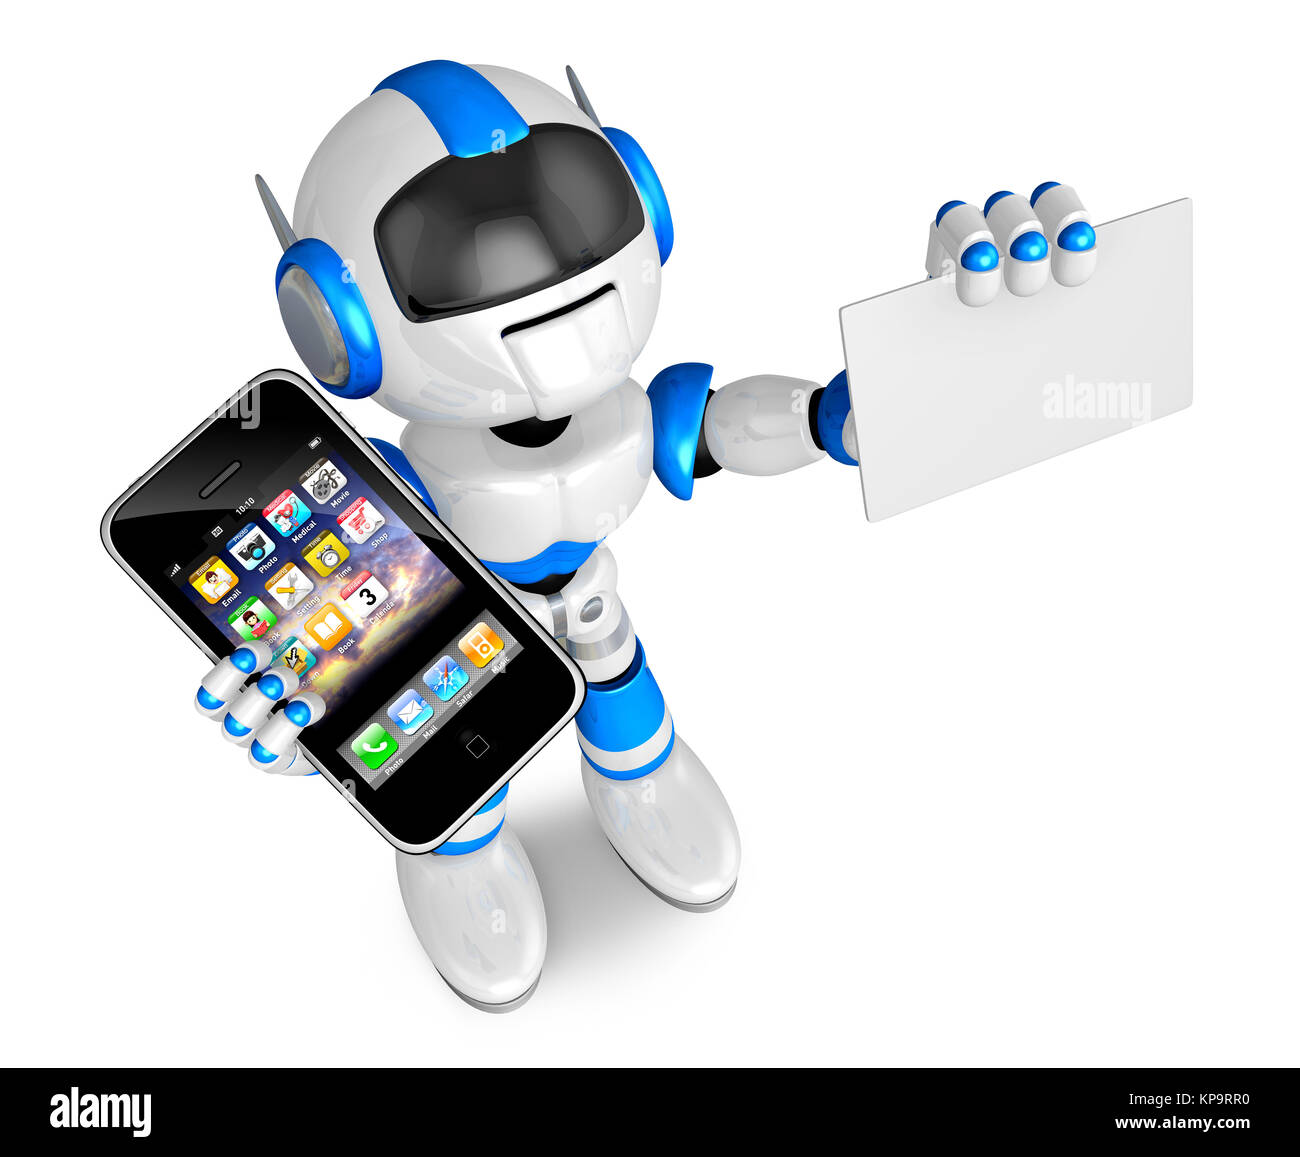 Blu carattere robot Smart Phone la mano sinistra tiene. business card con  la mano destra. Creare 3D robot umanoide serie Foto stock - Alamy